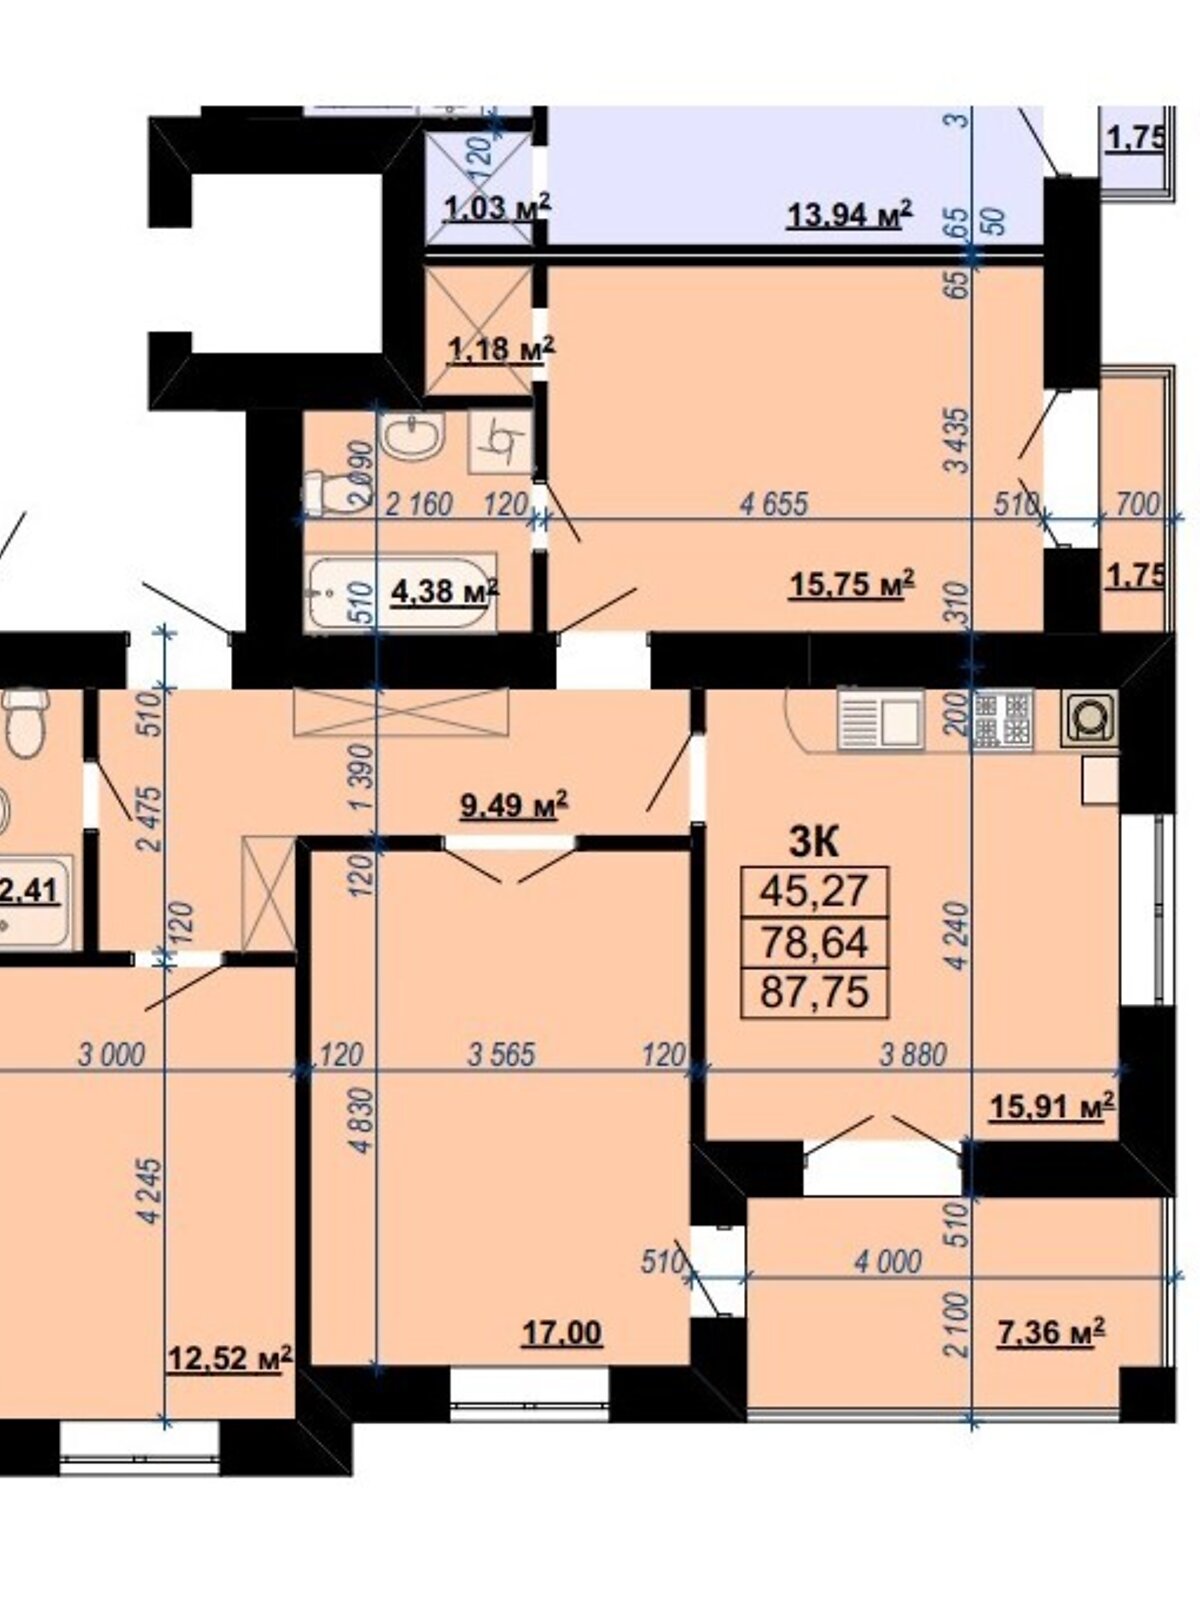 Продажа трехкомнатной квартиры в Ивано-Франковске, на ул. Млынарская, район Кант фото 1